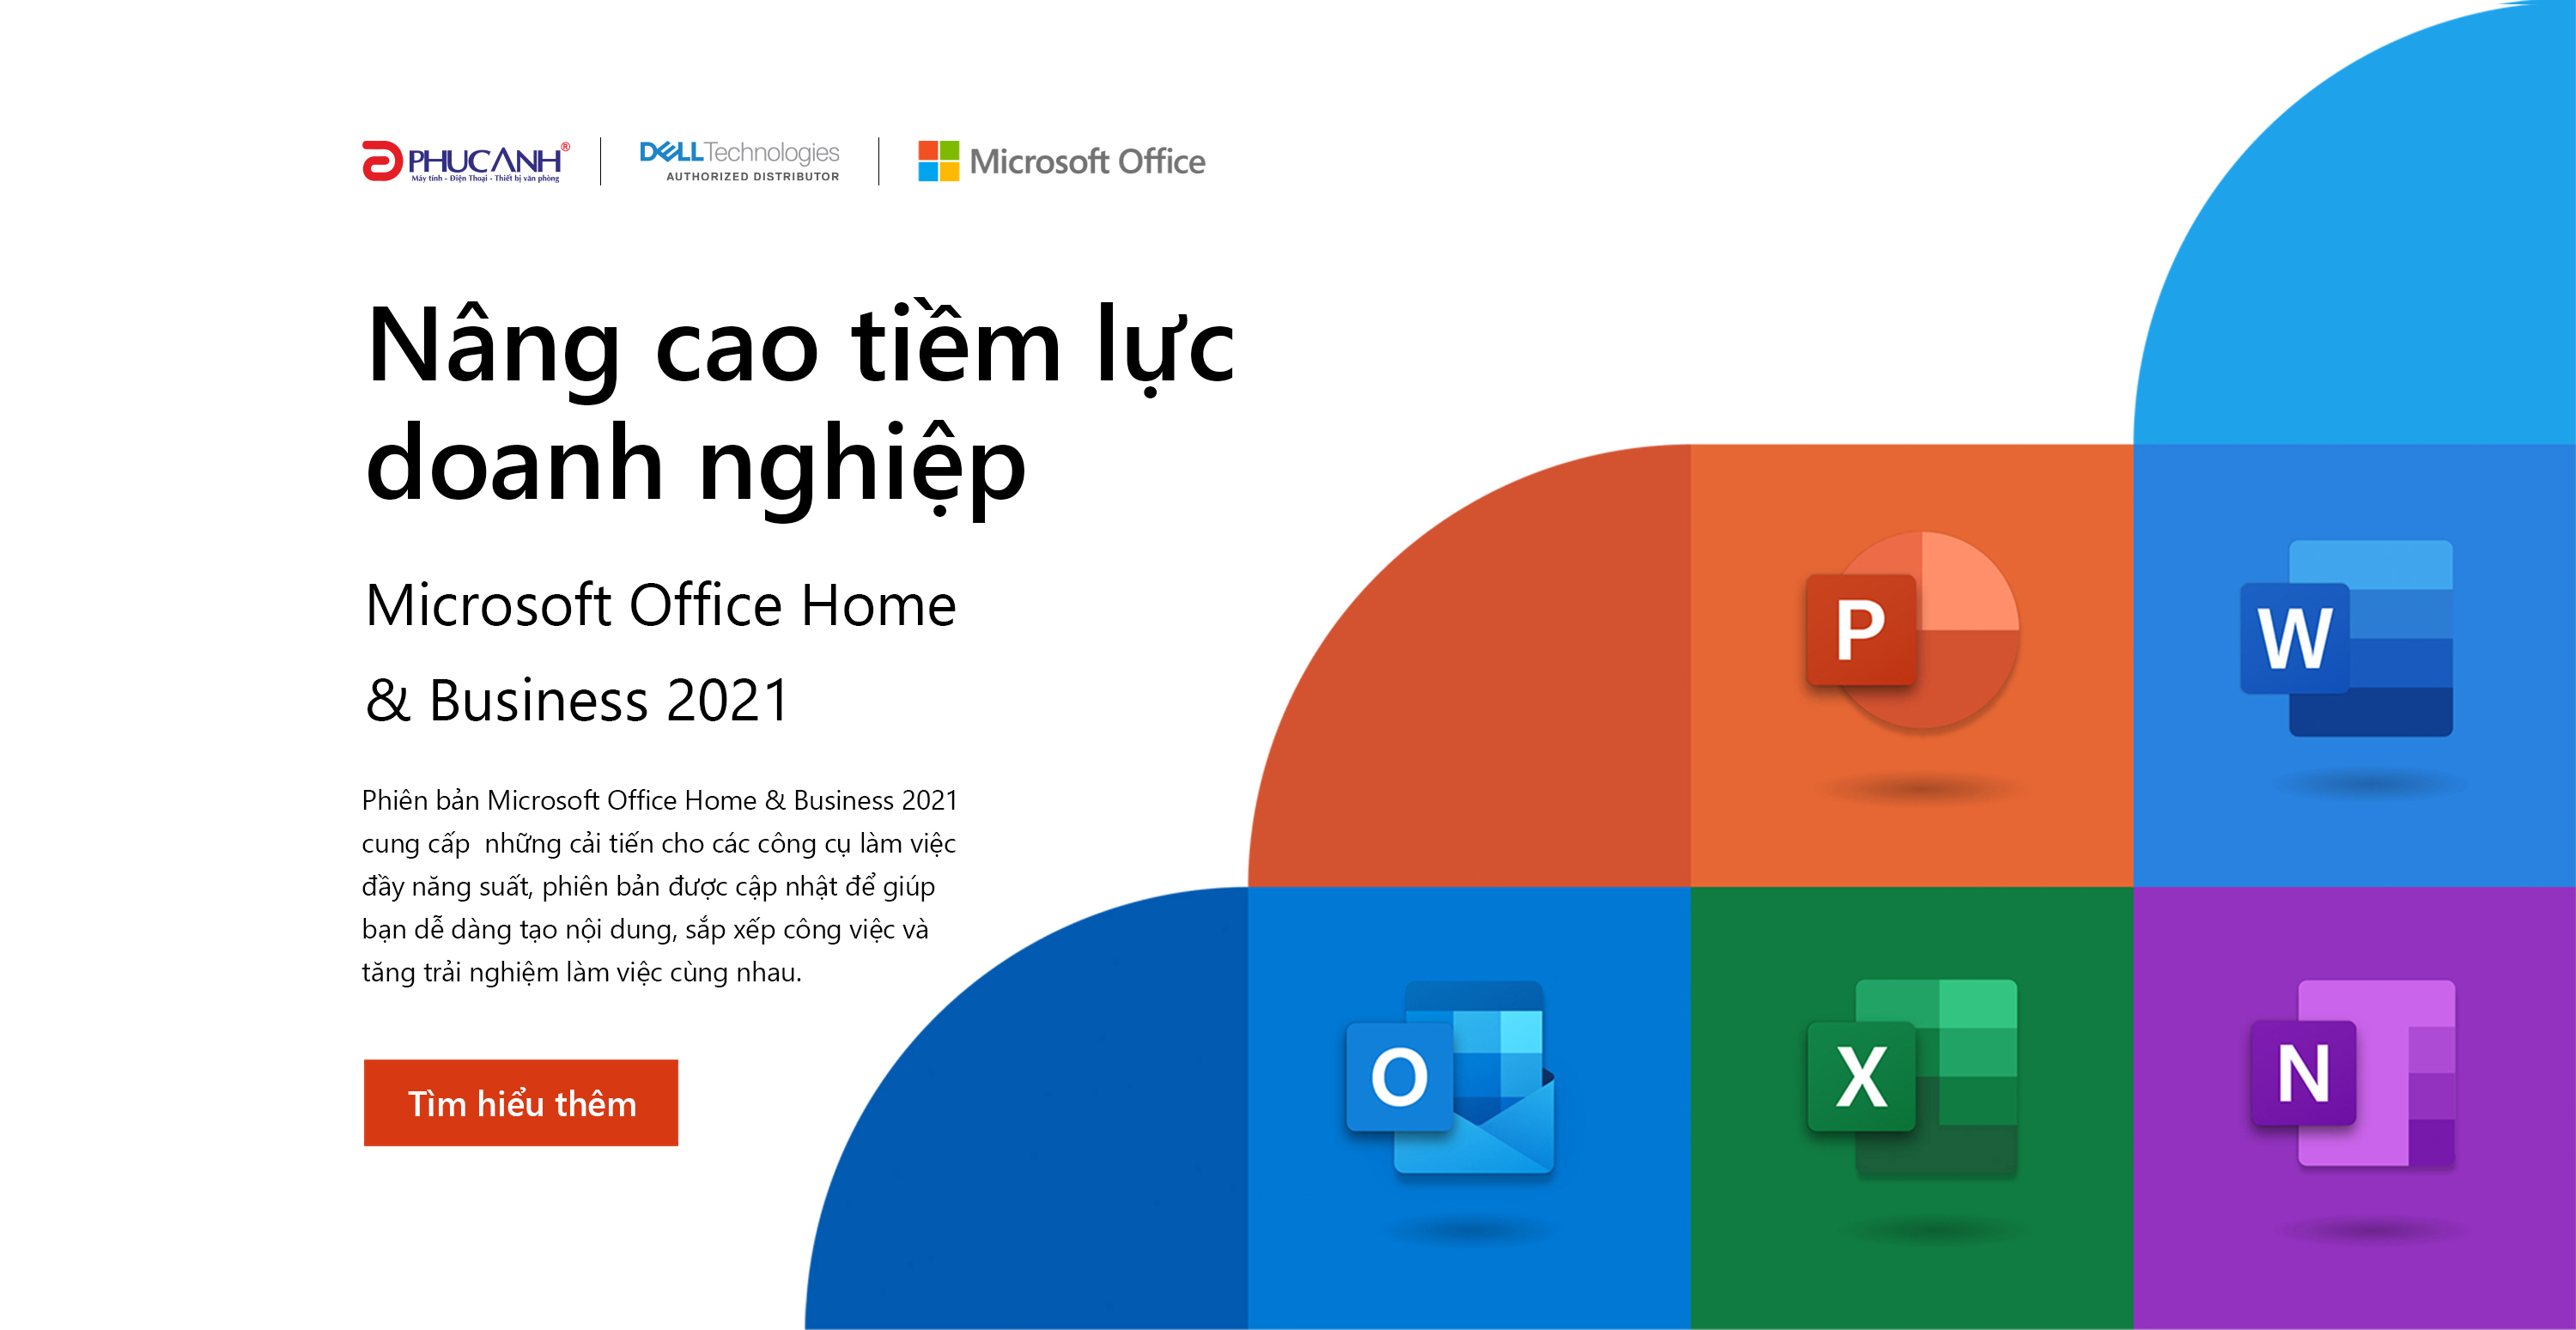 Nâng cao tiềm lực doanh nghiệp với Microsoft Office Home and Business 2021